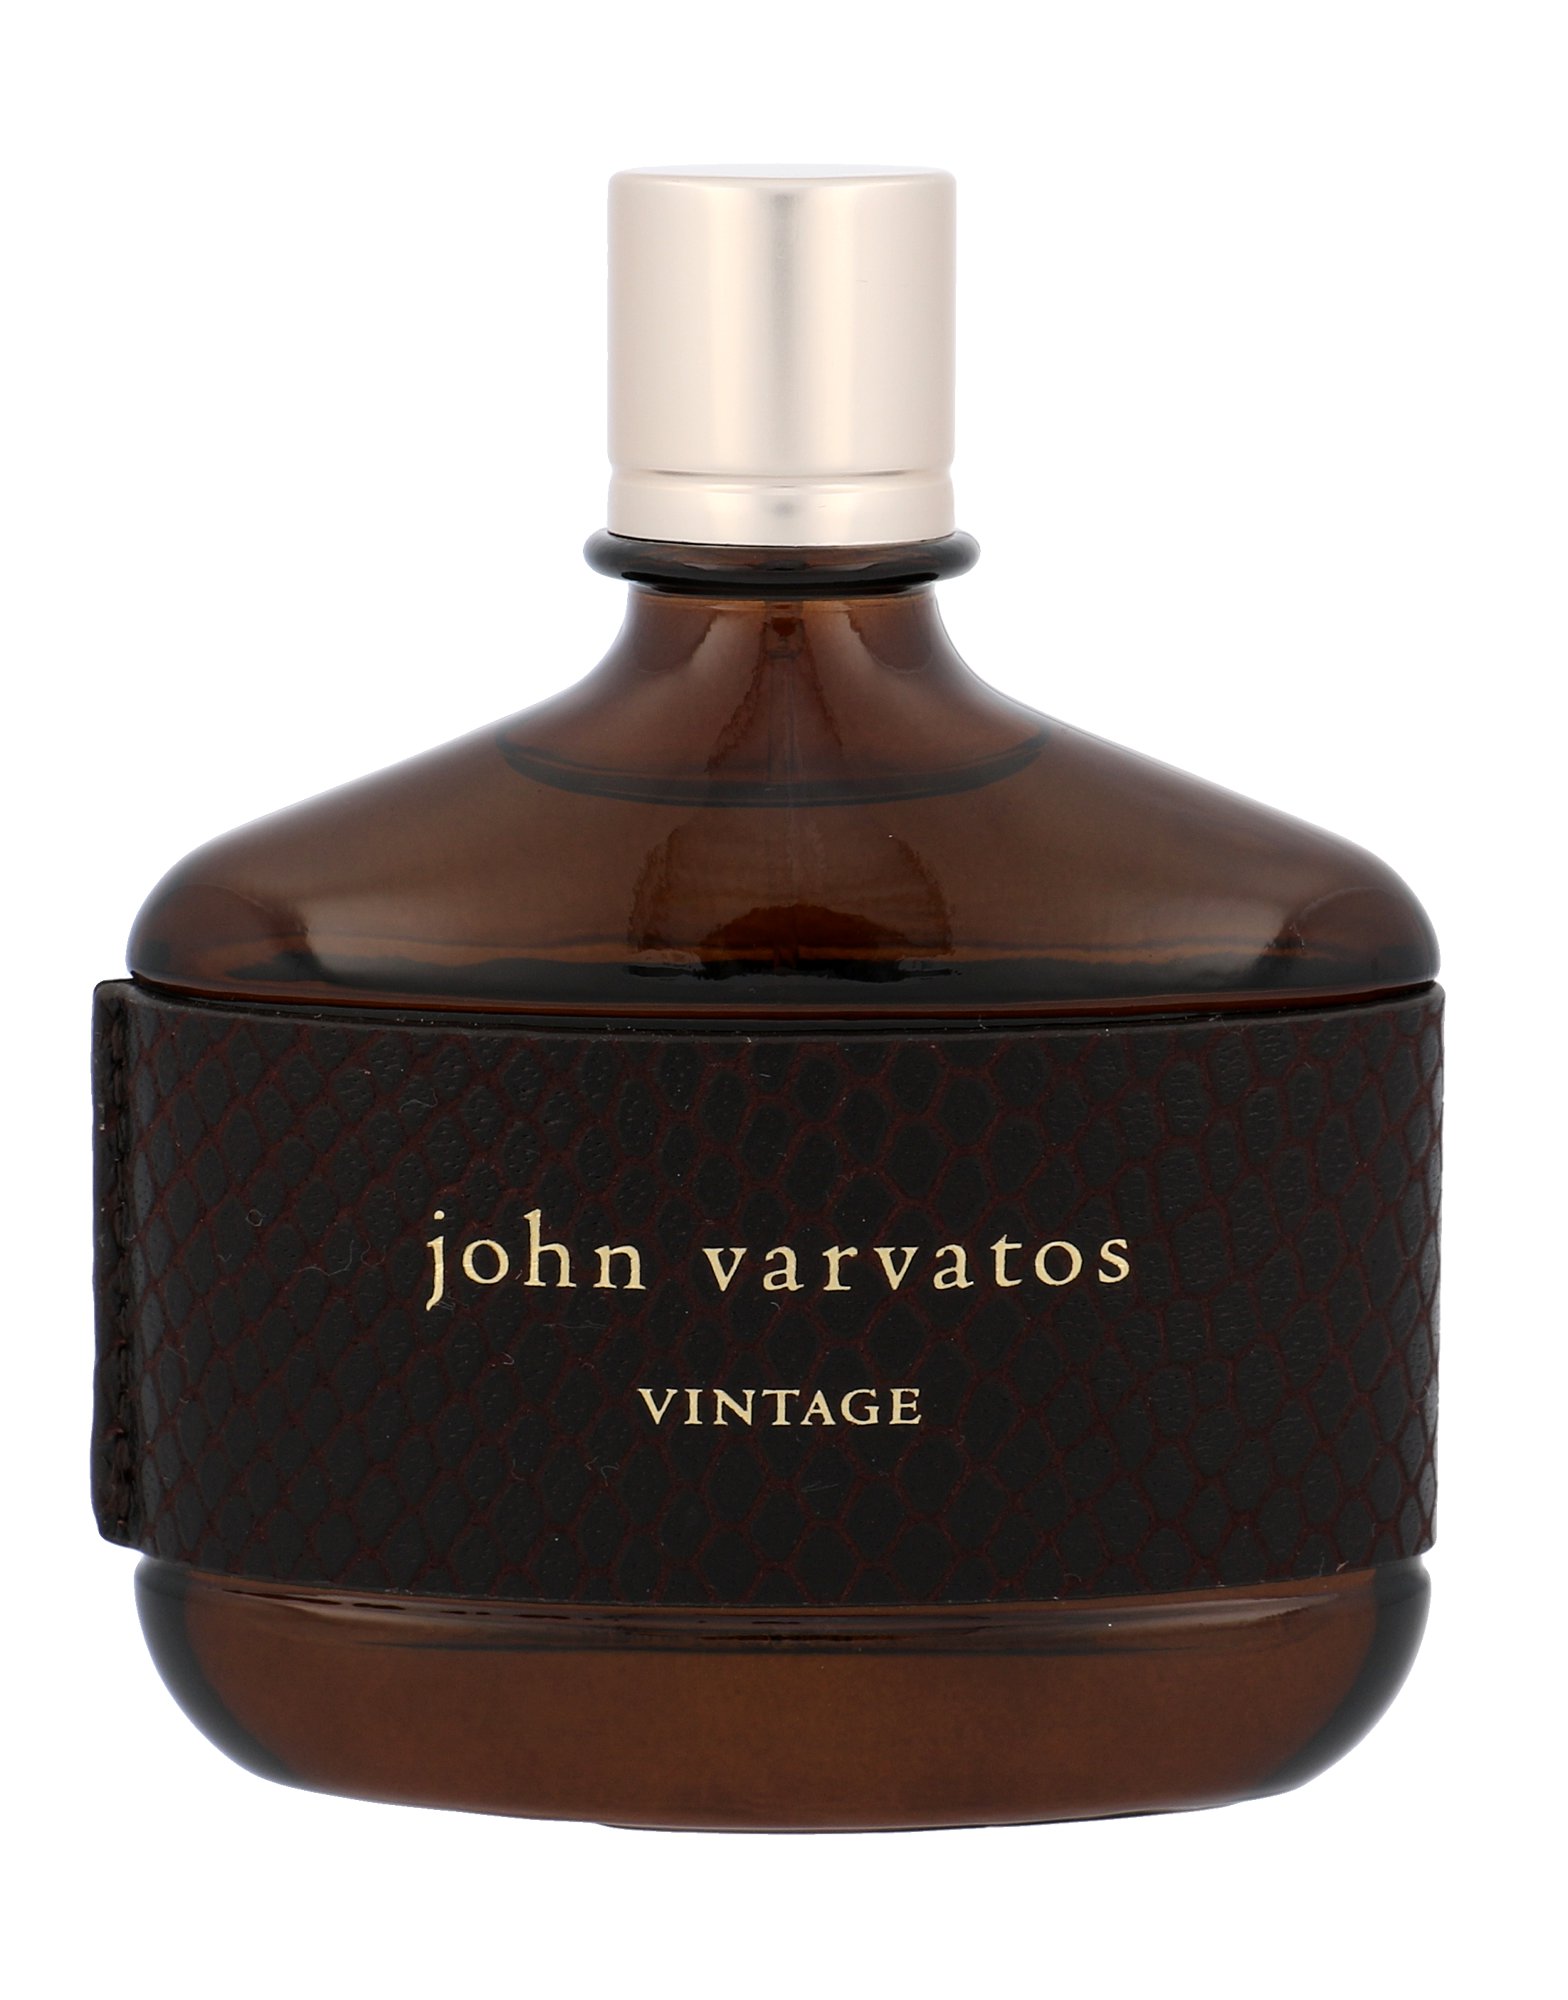 John Varvatos Vintage, Toaletní voda 75ml